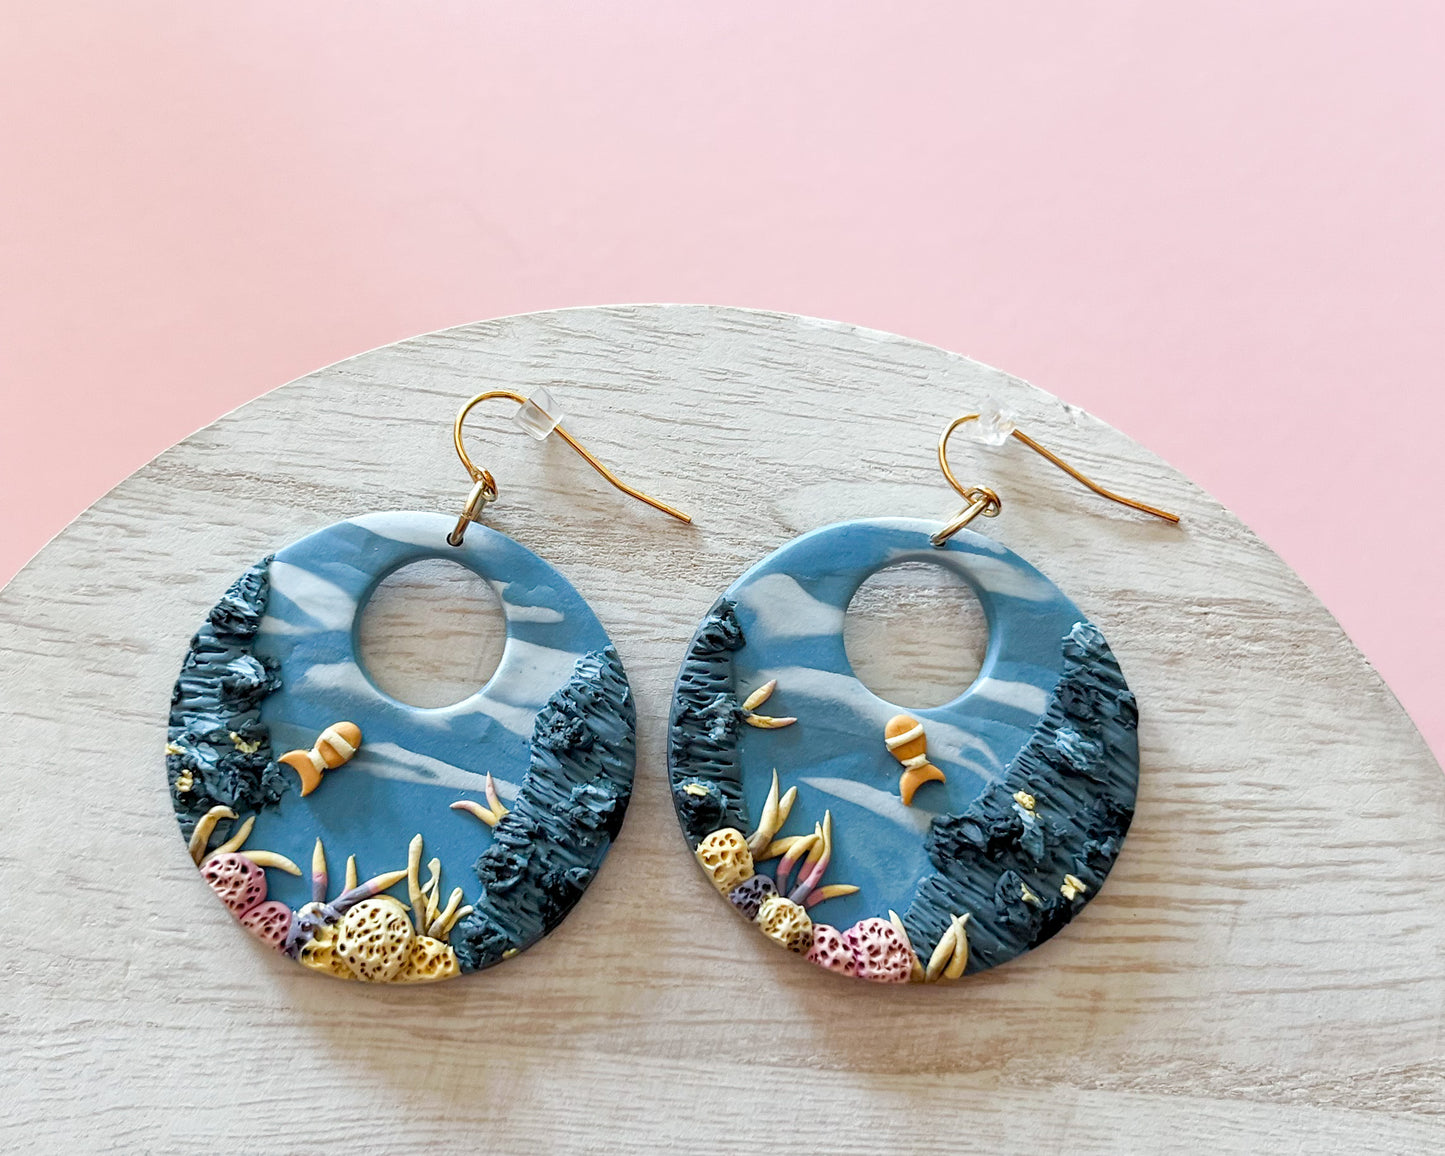 Aquascape ocean landscape earrings | 18k gold plated